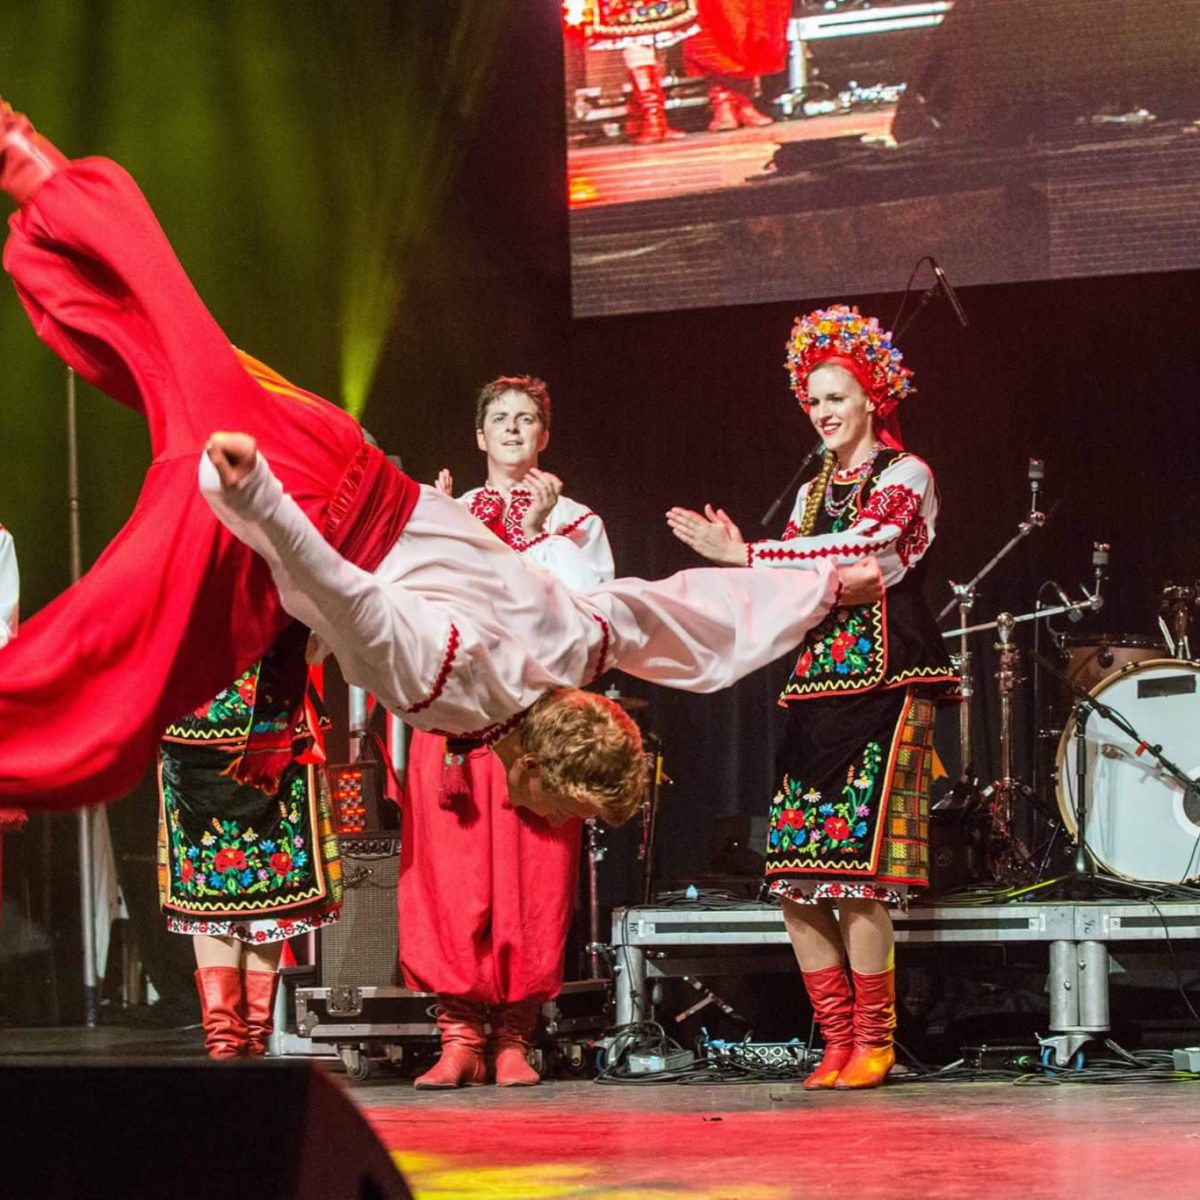 The Bloor West Village Toronto Ukrainian Festival